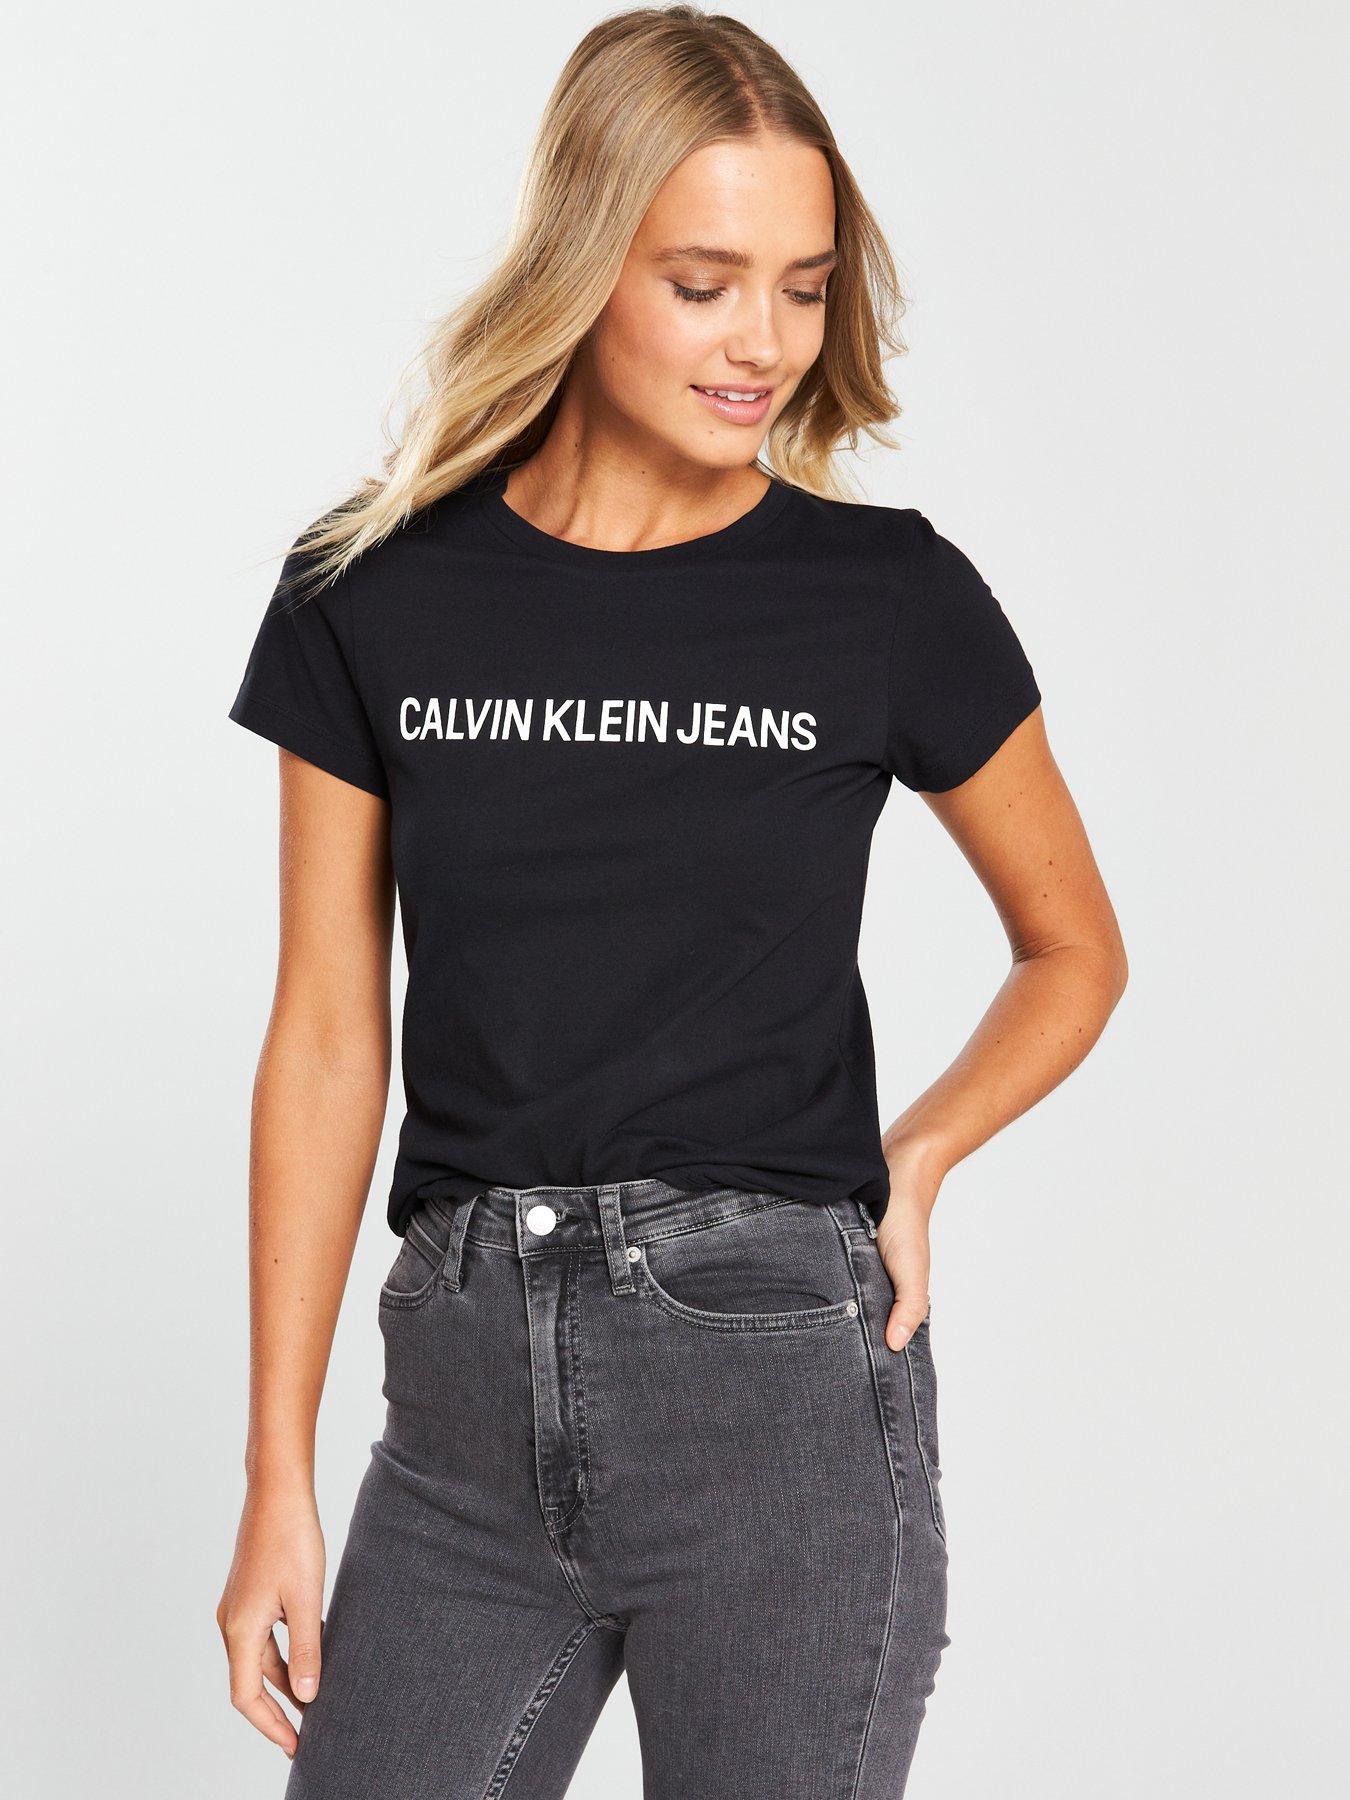 calvin klein slim fit t shirt